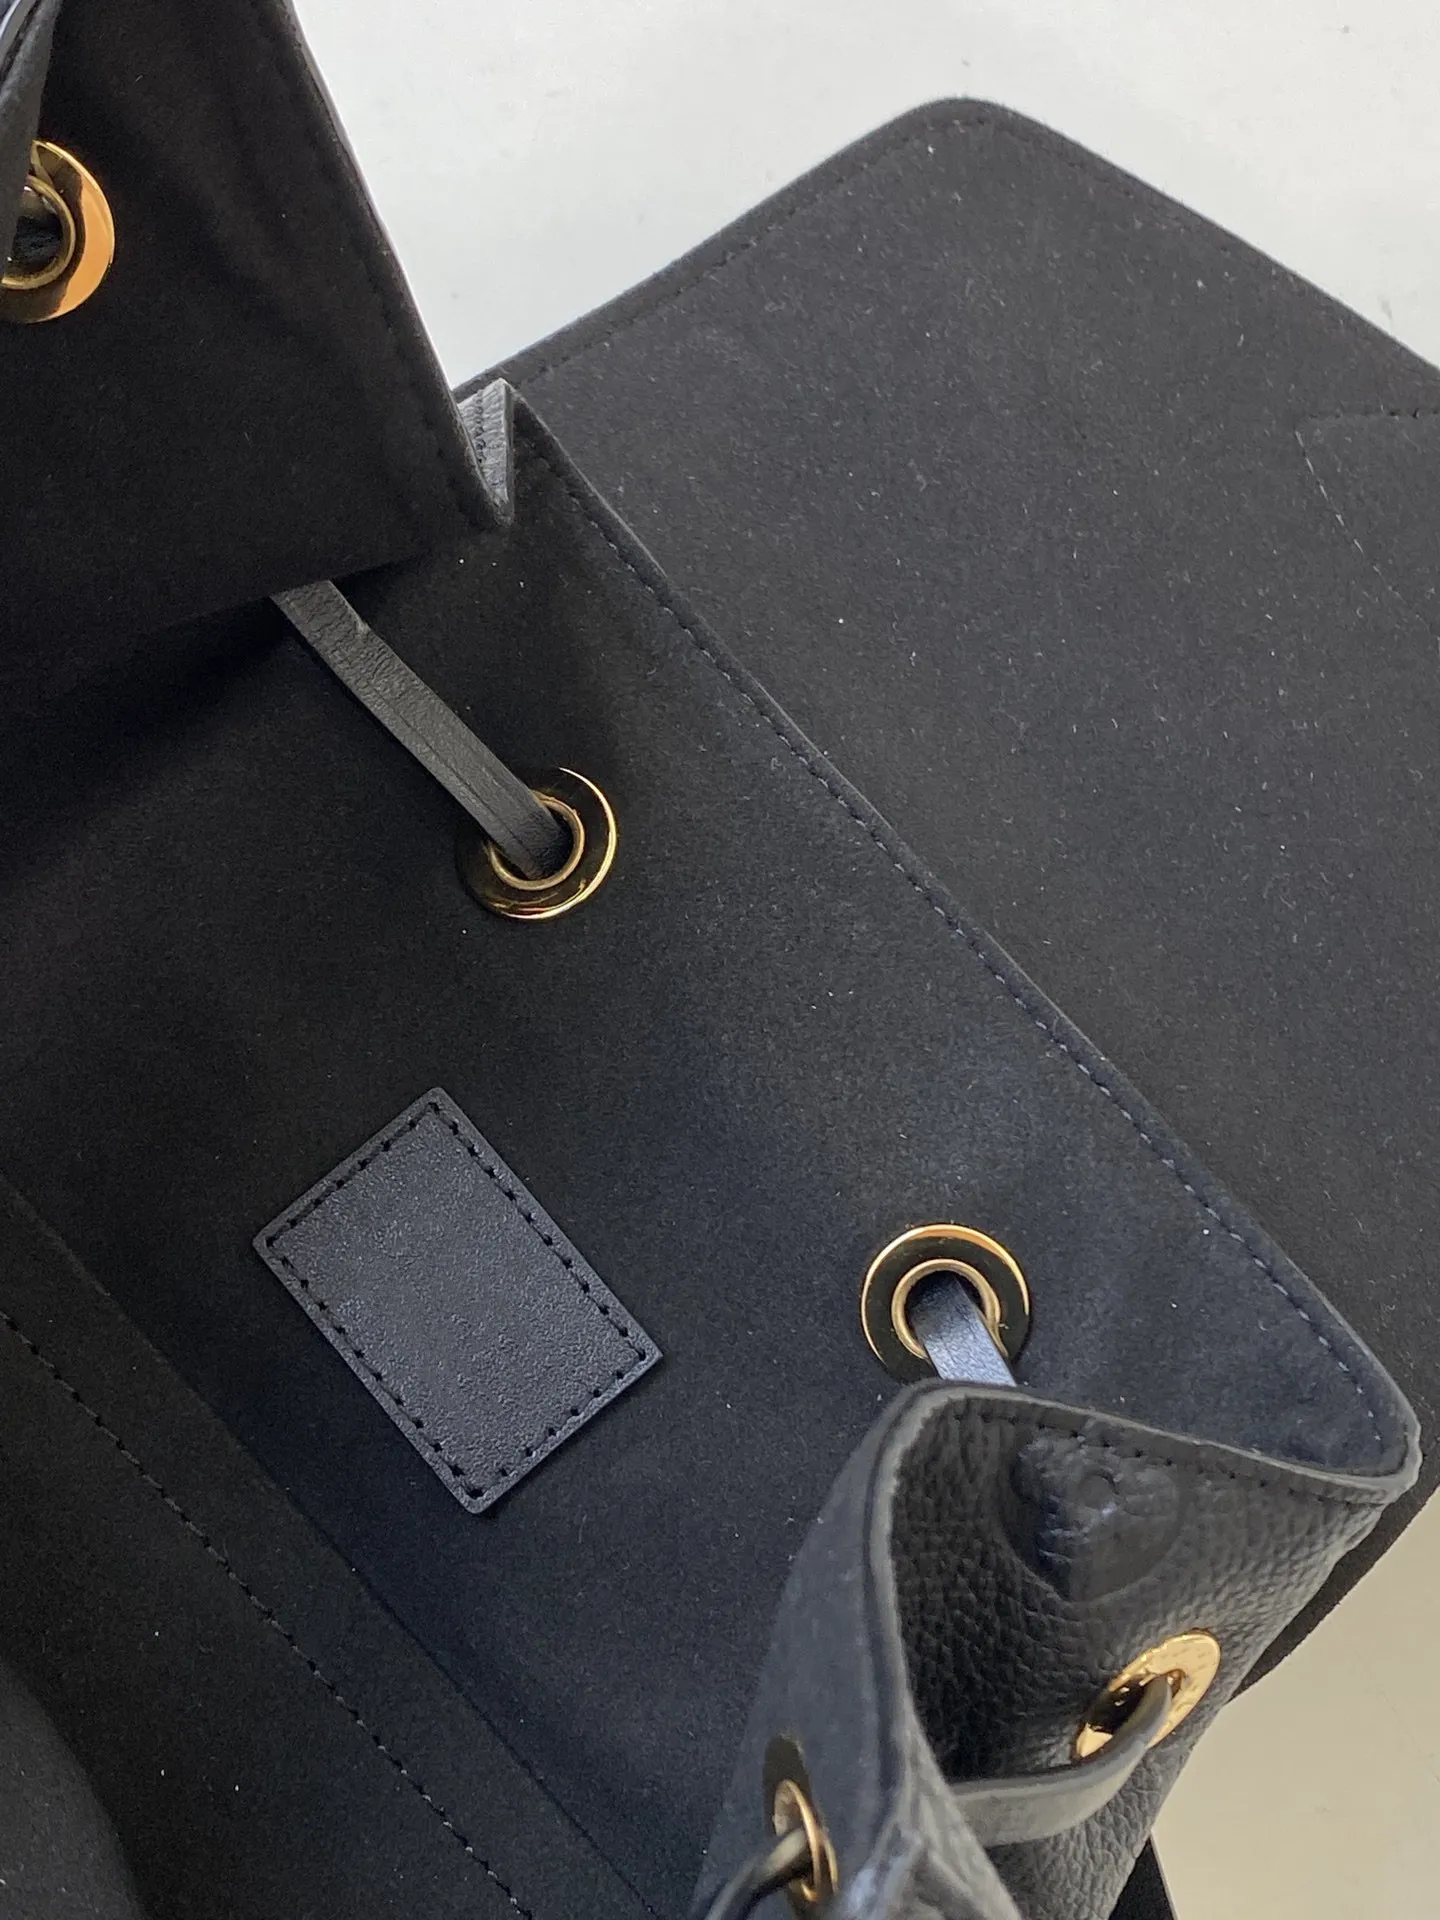 2021 Backpack School Bags Shoulder Bags Removable Shoulder Strap Cowhide Genuine Leather Fashion Letter Pattern String Black High Quality